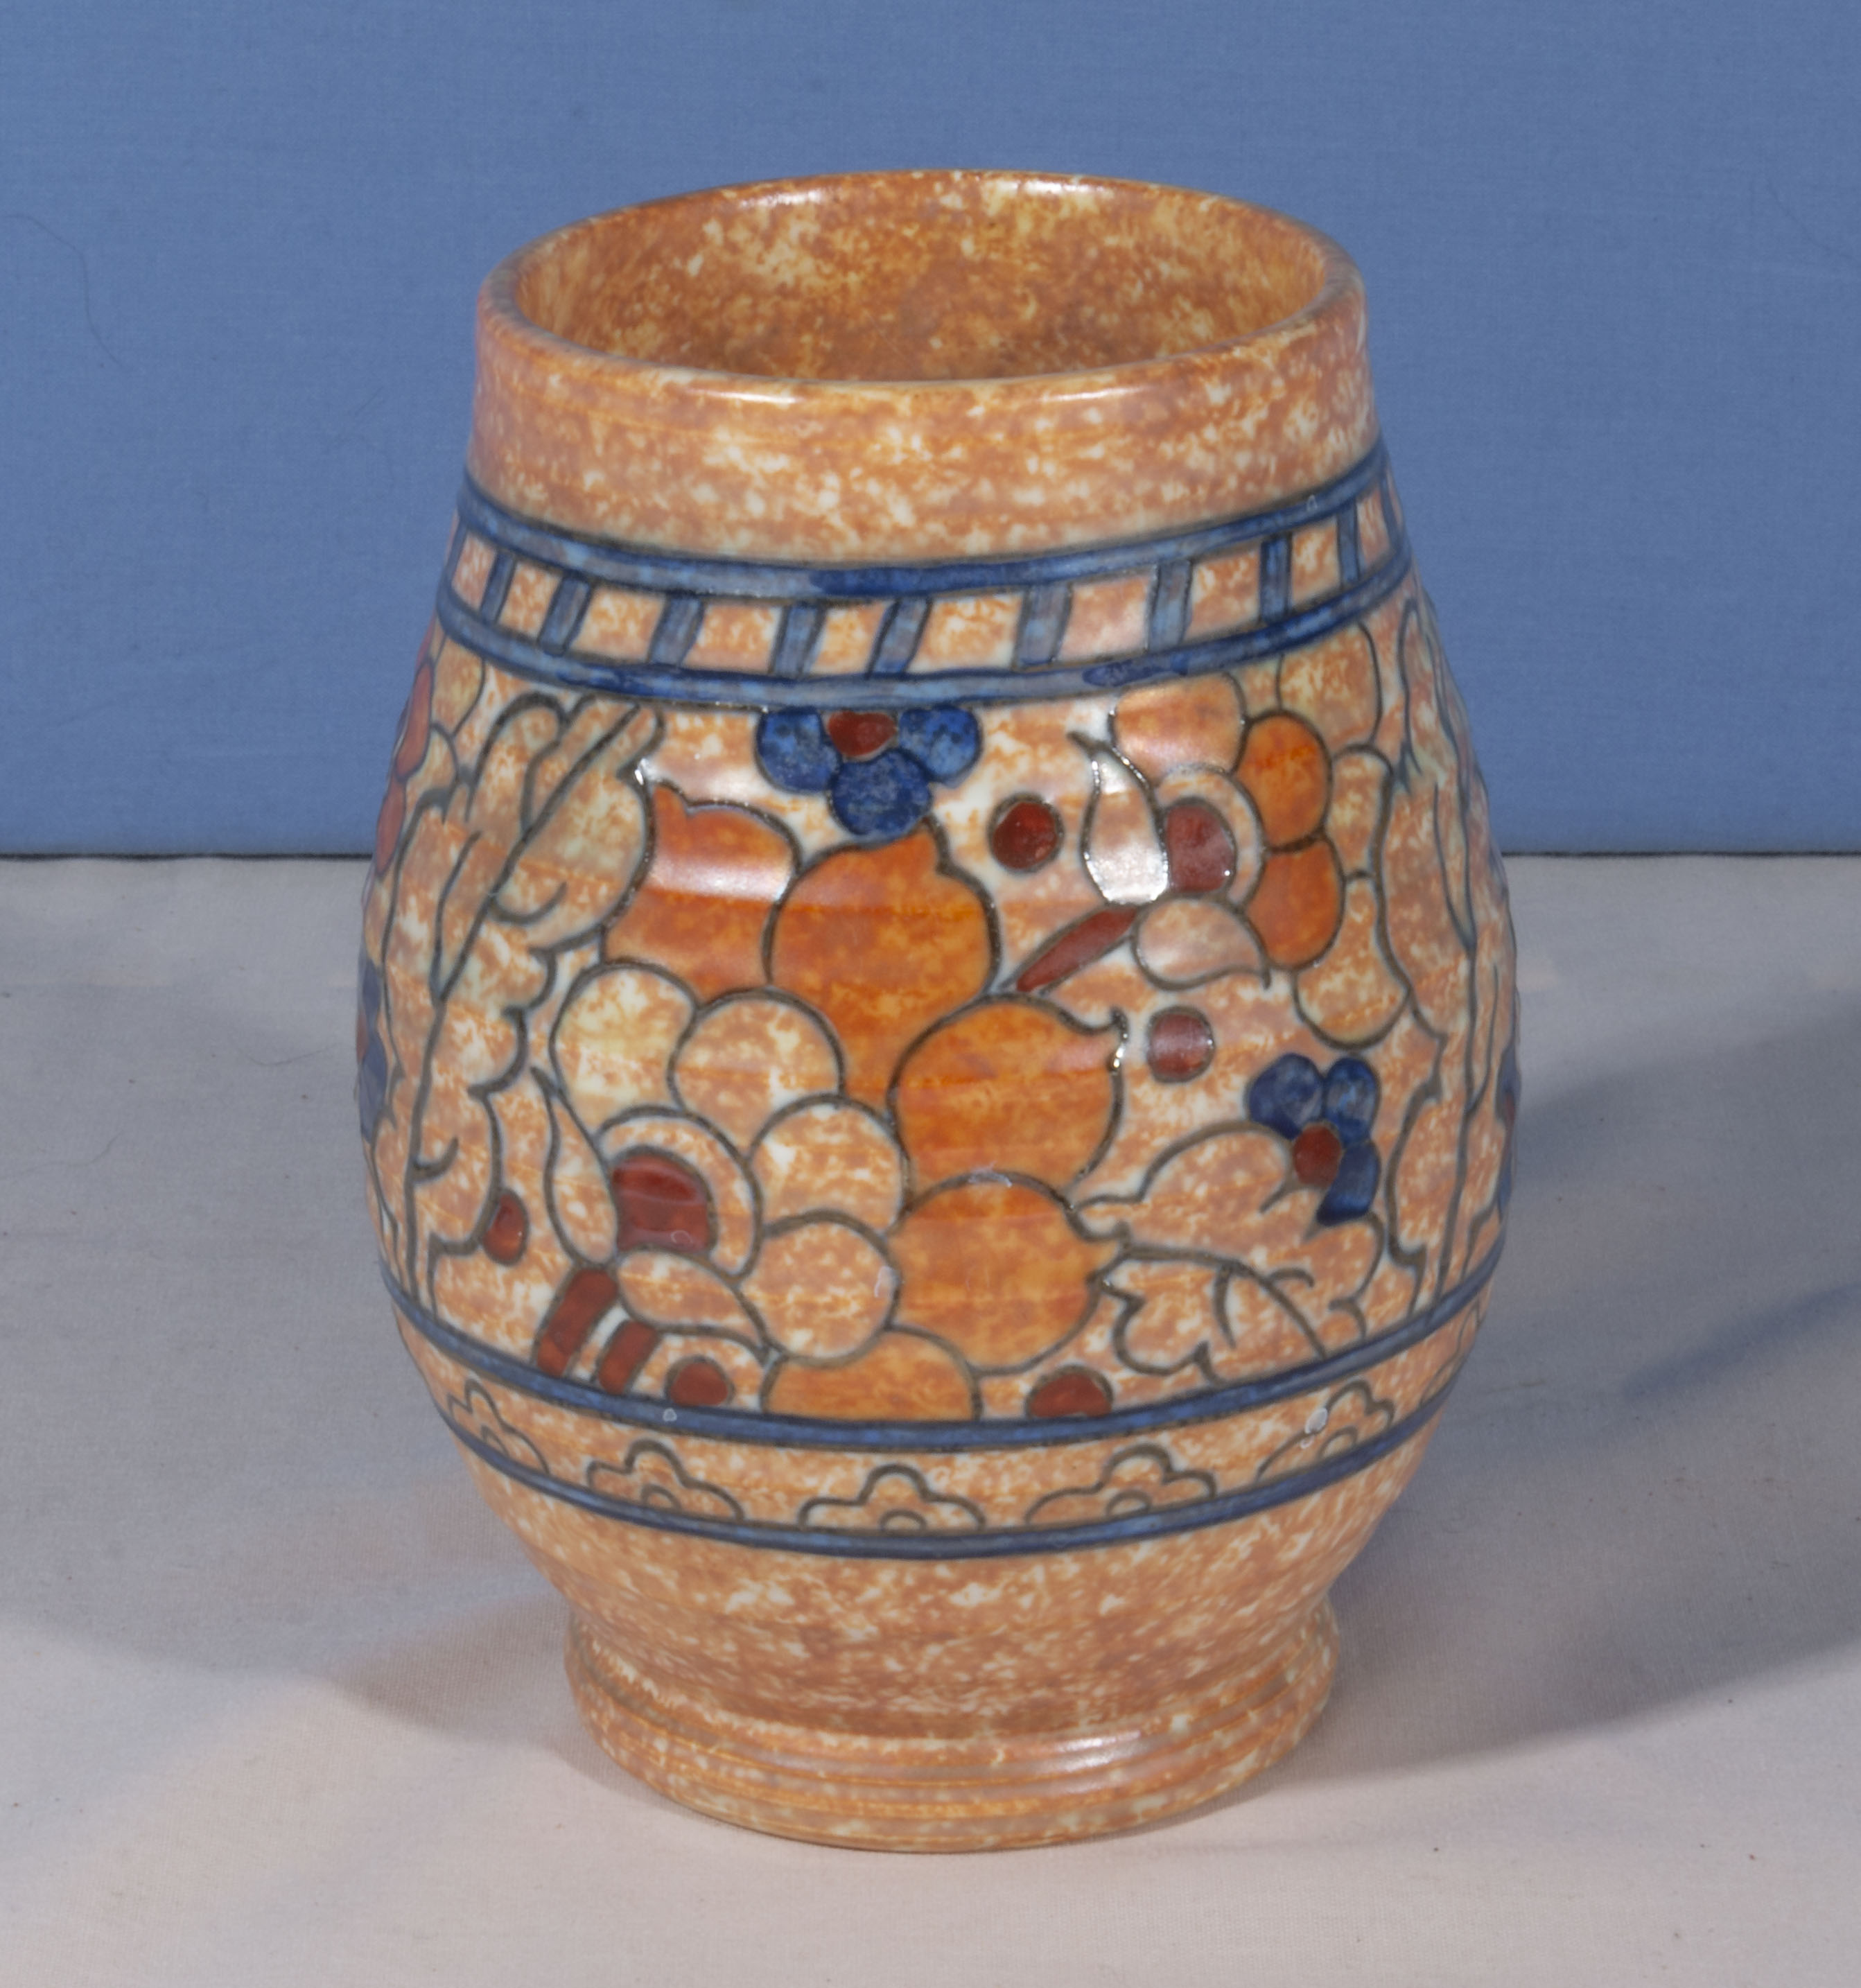 A small Crown Ducal Charlotte Rhead vase, 15cm tall